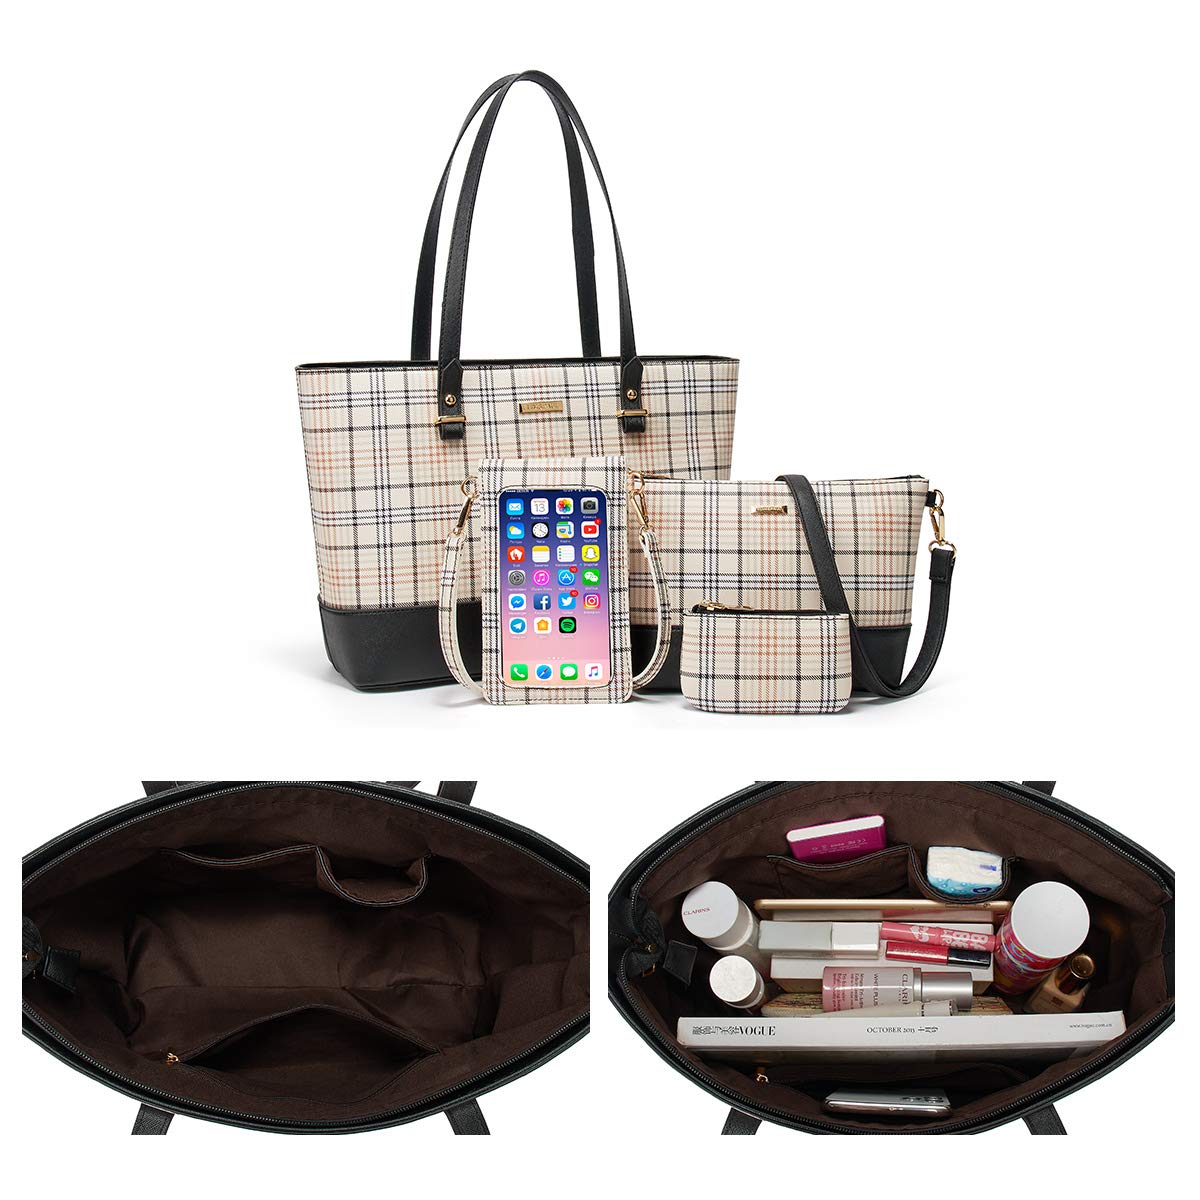 Women Fashion Synthetic Leather Handbags Tote Bag Shoulder Bag Top Handle Satchel Purse Wallet Set 4pcs